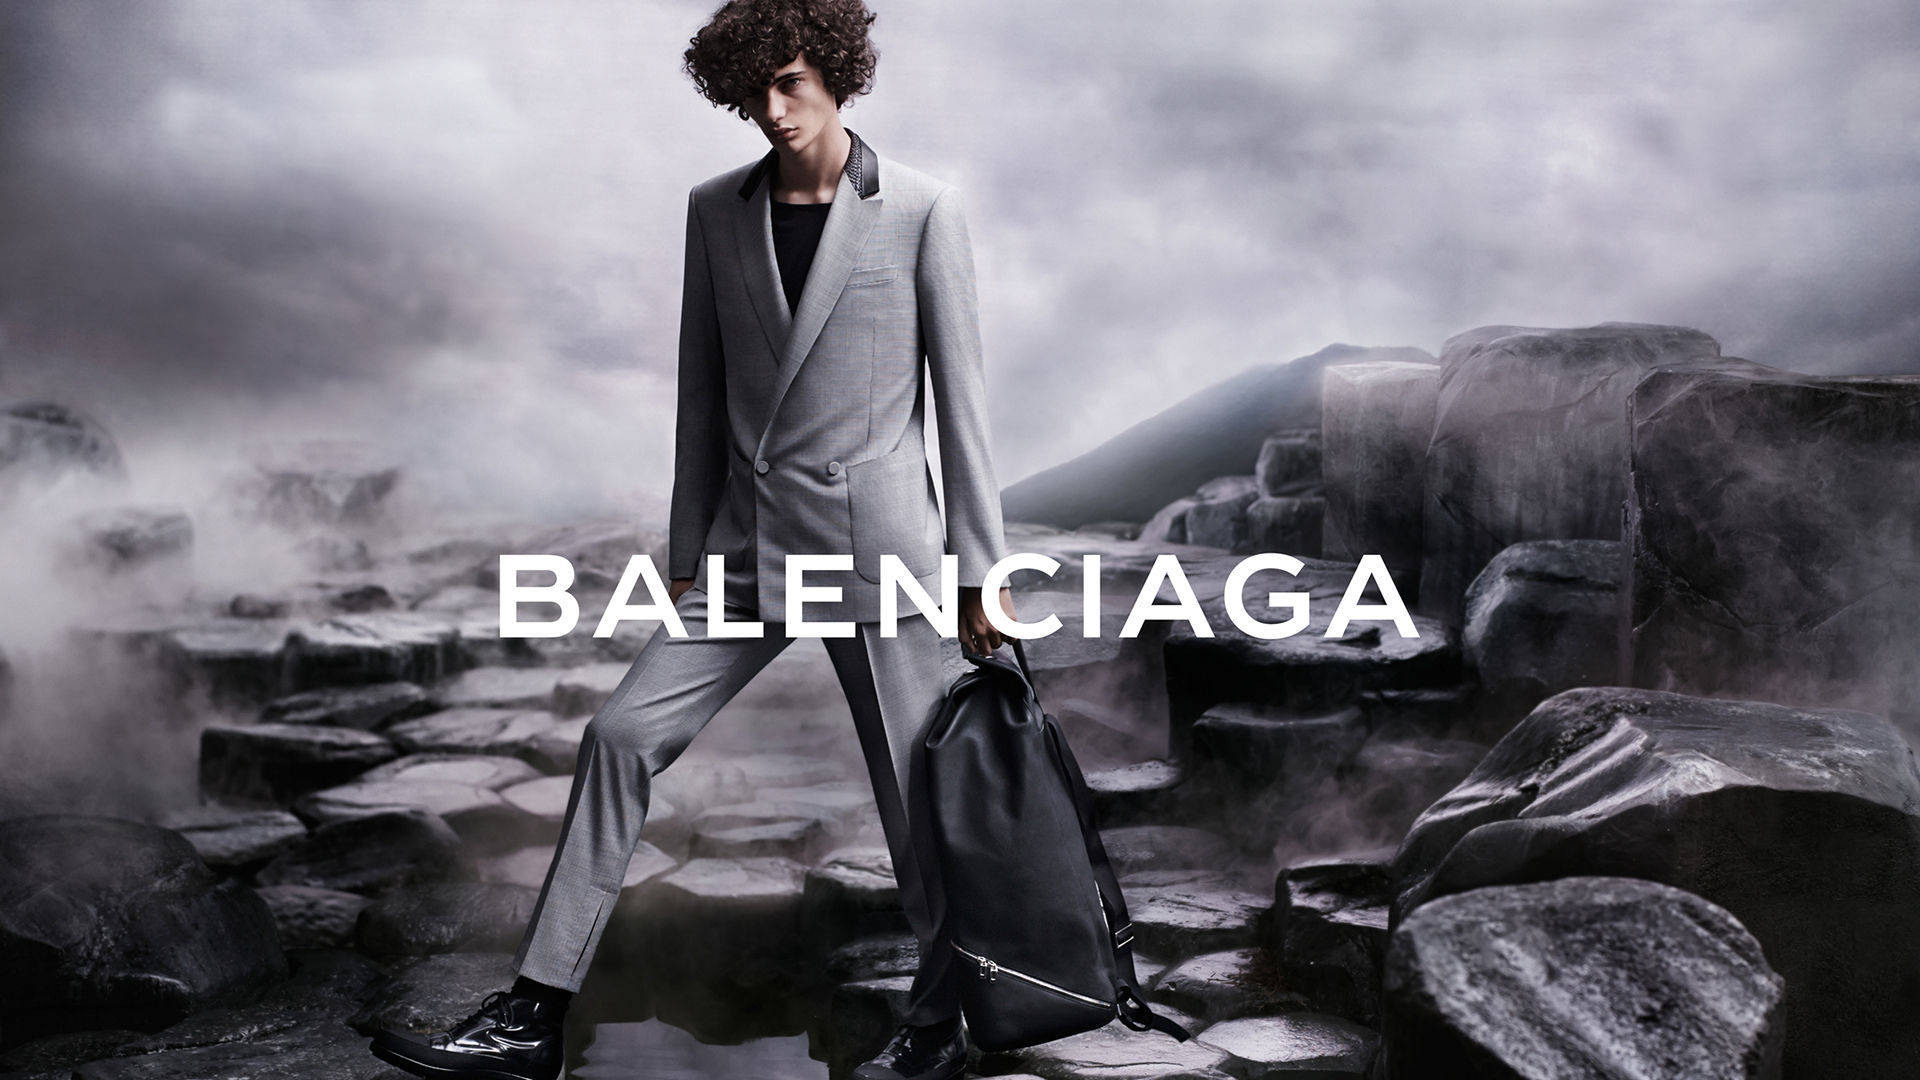 Balenciaga Male Model In Suit